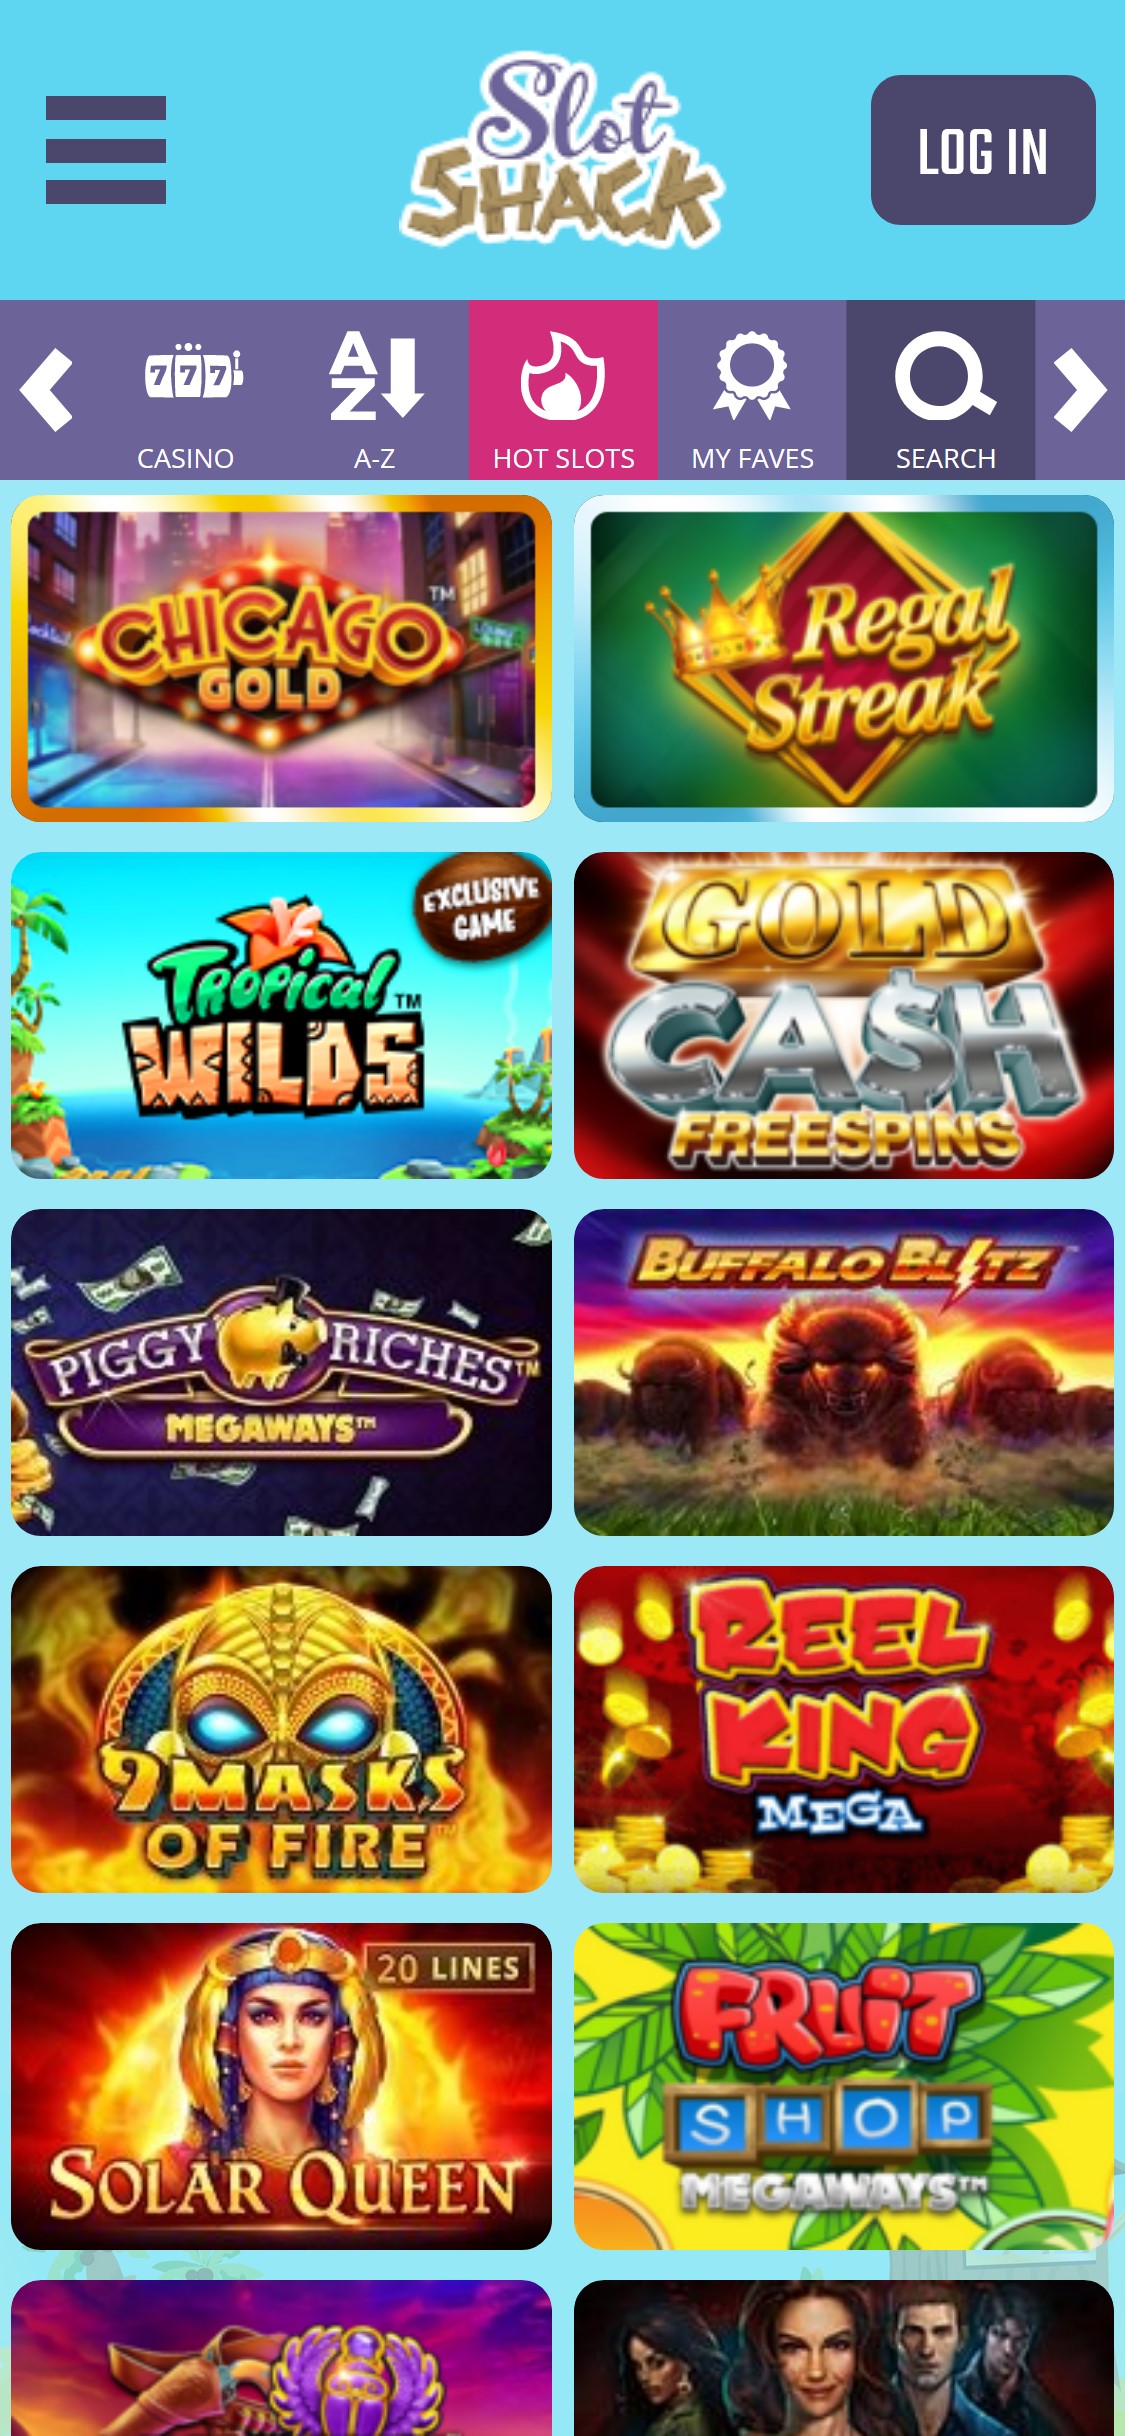 Slot Shack Casino Mobile Games Review